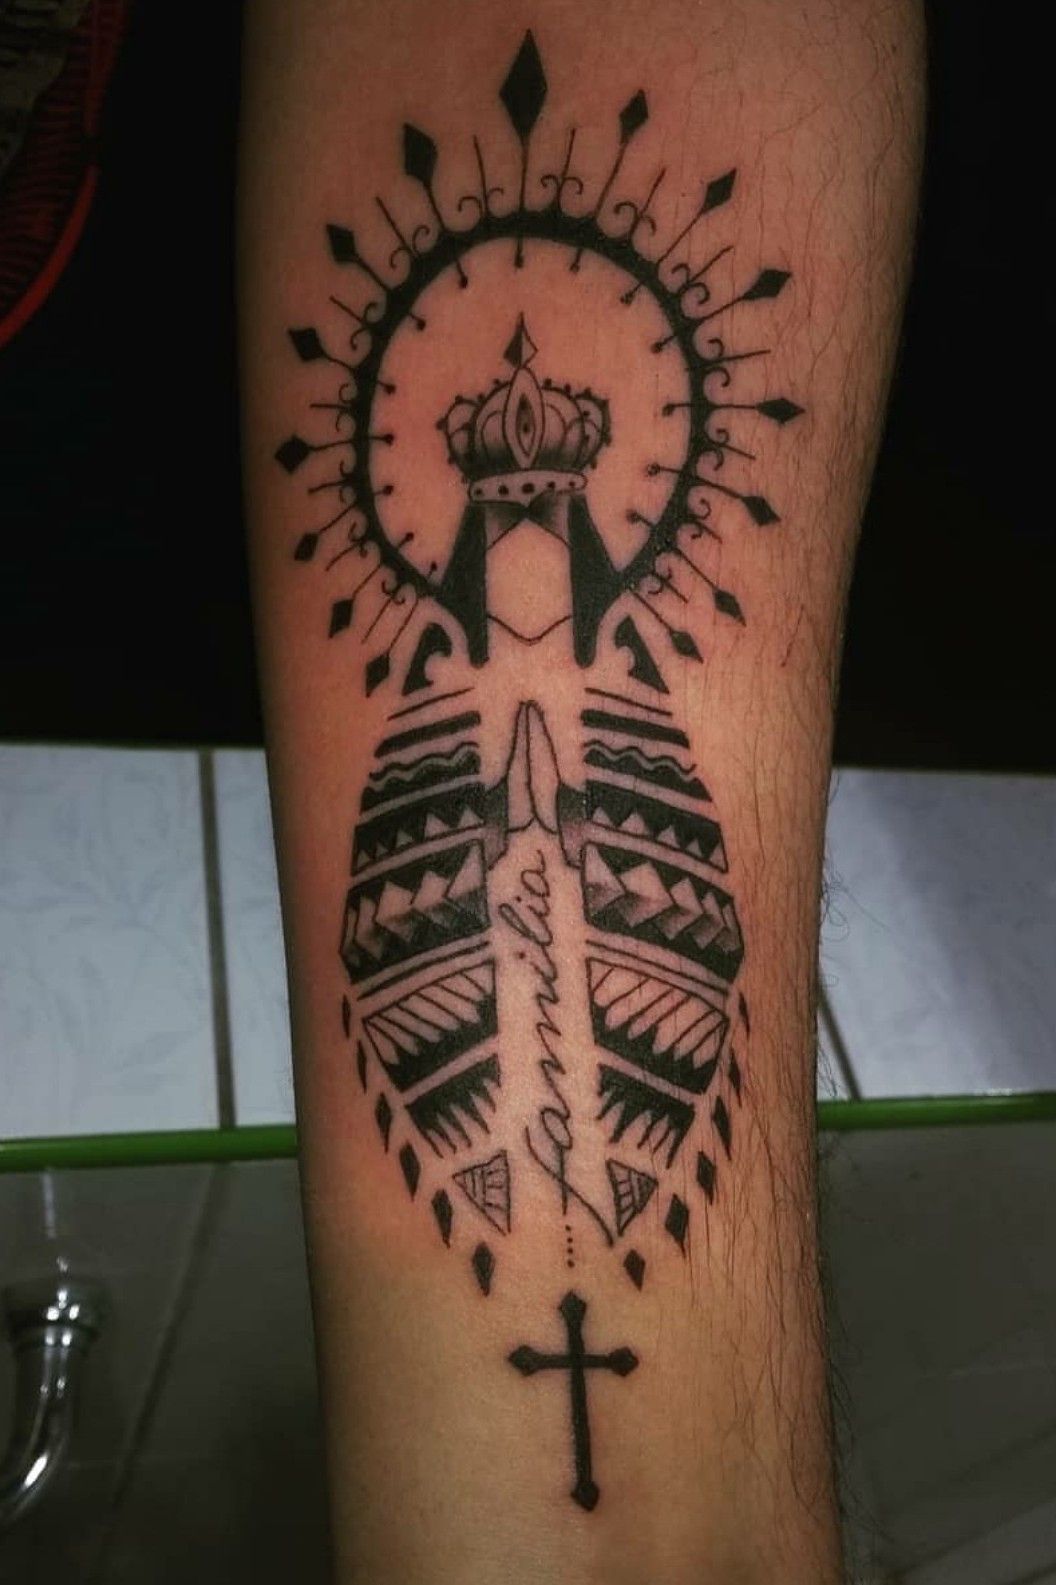 Tattoo uploaded by Marend Tattoo • Texto Rexpeita braço • Tattoodo